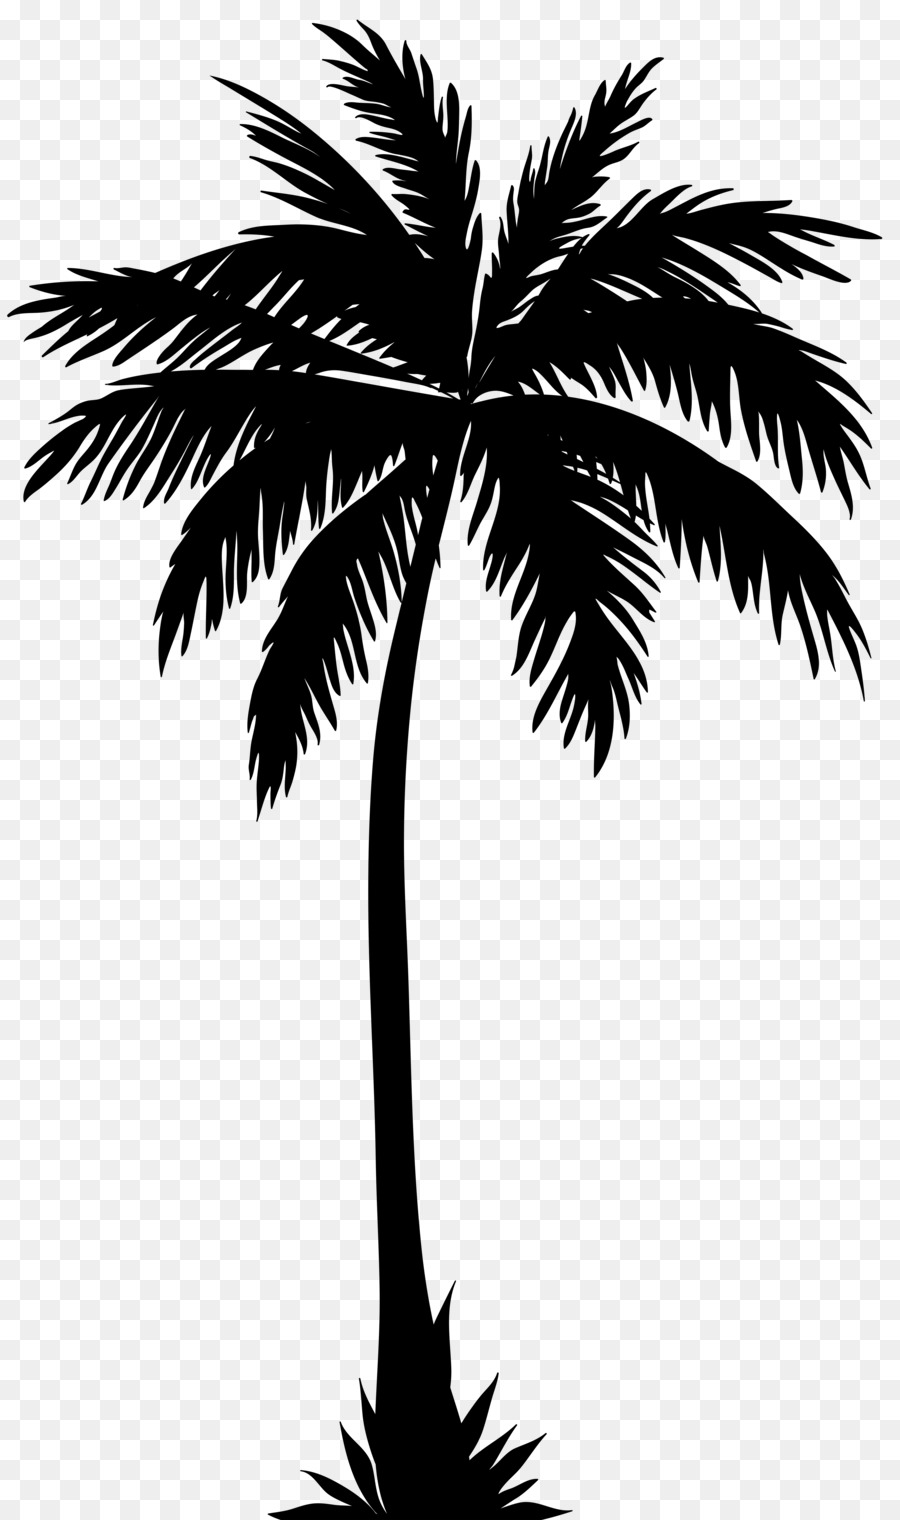 Arecaceae Silhouette Tree Clip art - coconut tree png download - 4738*8000 - Free Transparent Arecaceae png Download.